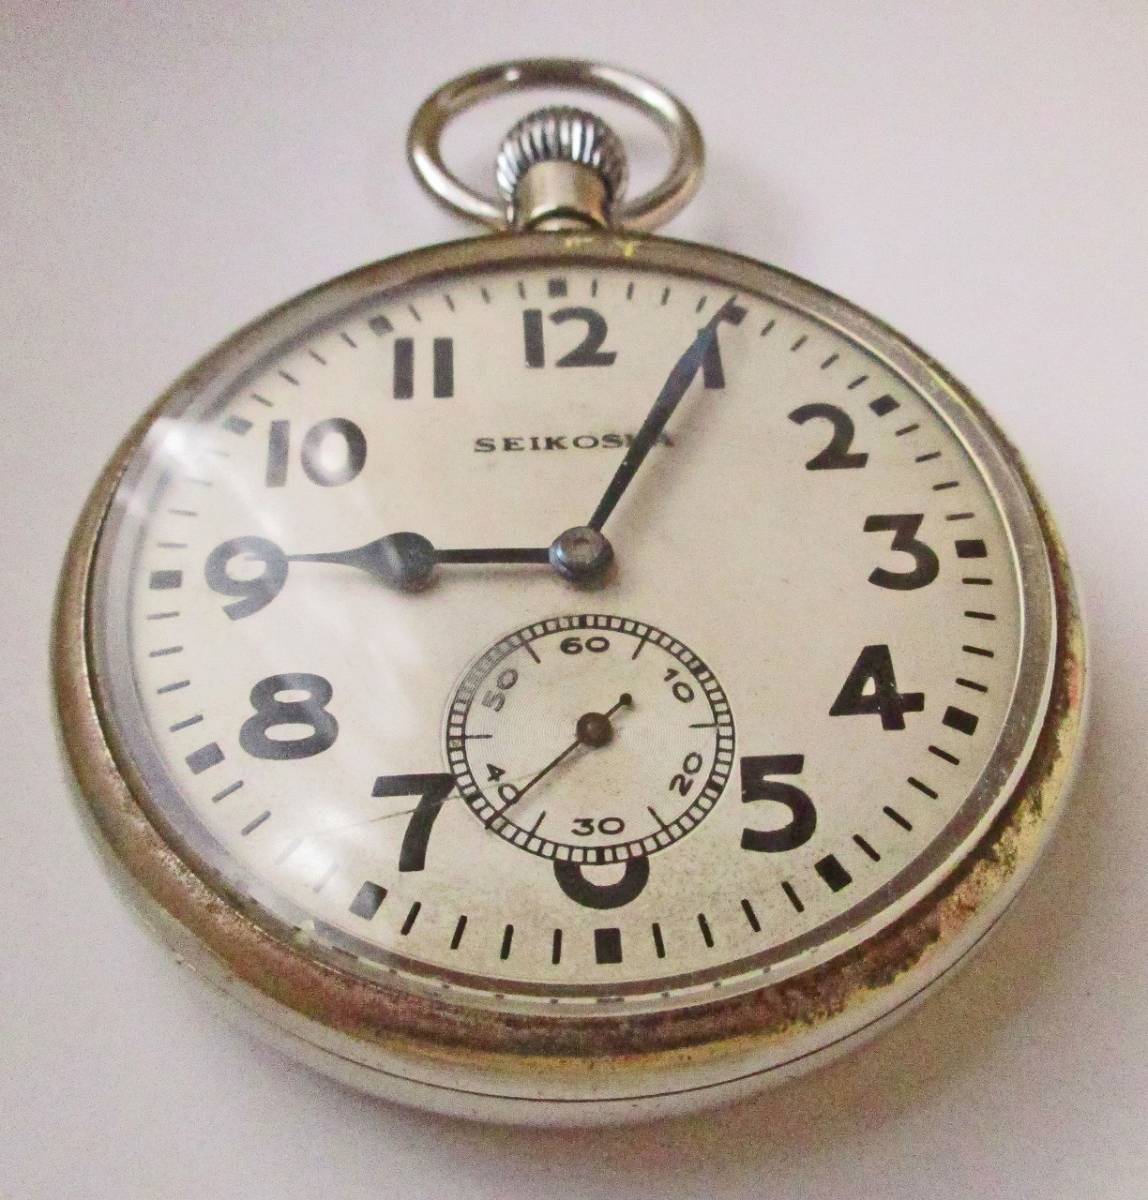 SEIKOSHA 戦前 大型機械式懐中時計 セイコーシャ 逓信時計 鉄道時計  懐中時計 稼働品 の画像2